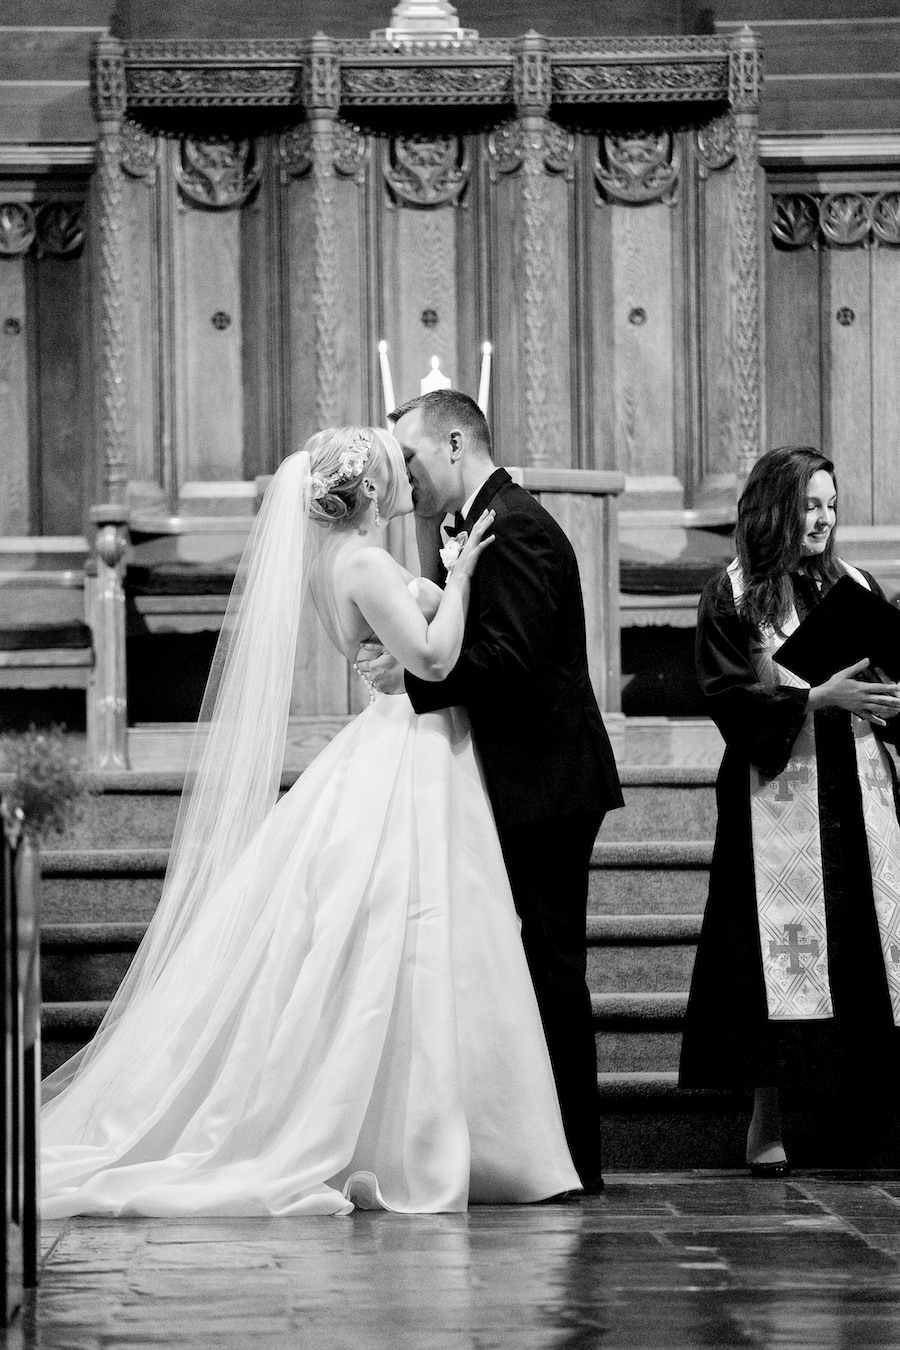 A bride and groom sharing their first kiss during their Kalamazoo, Michigan wedding